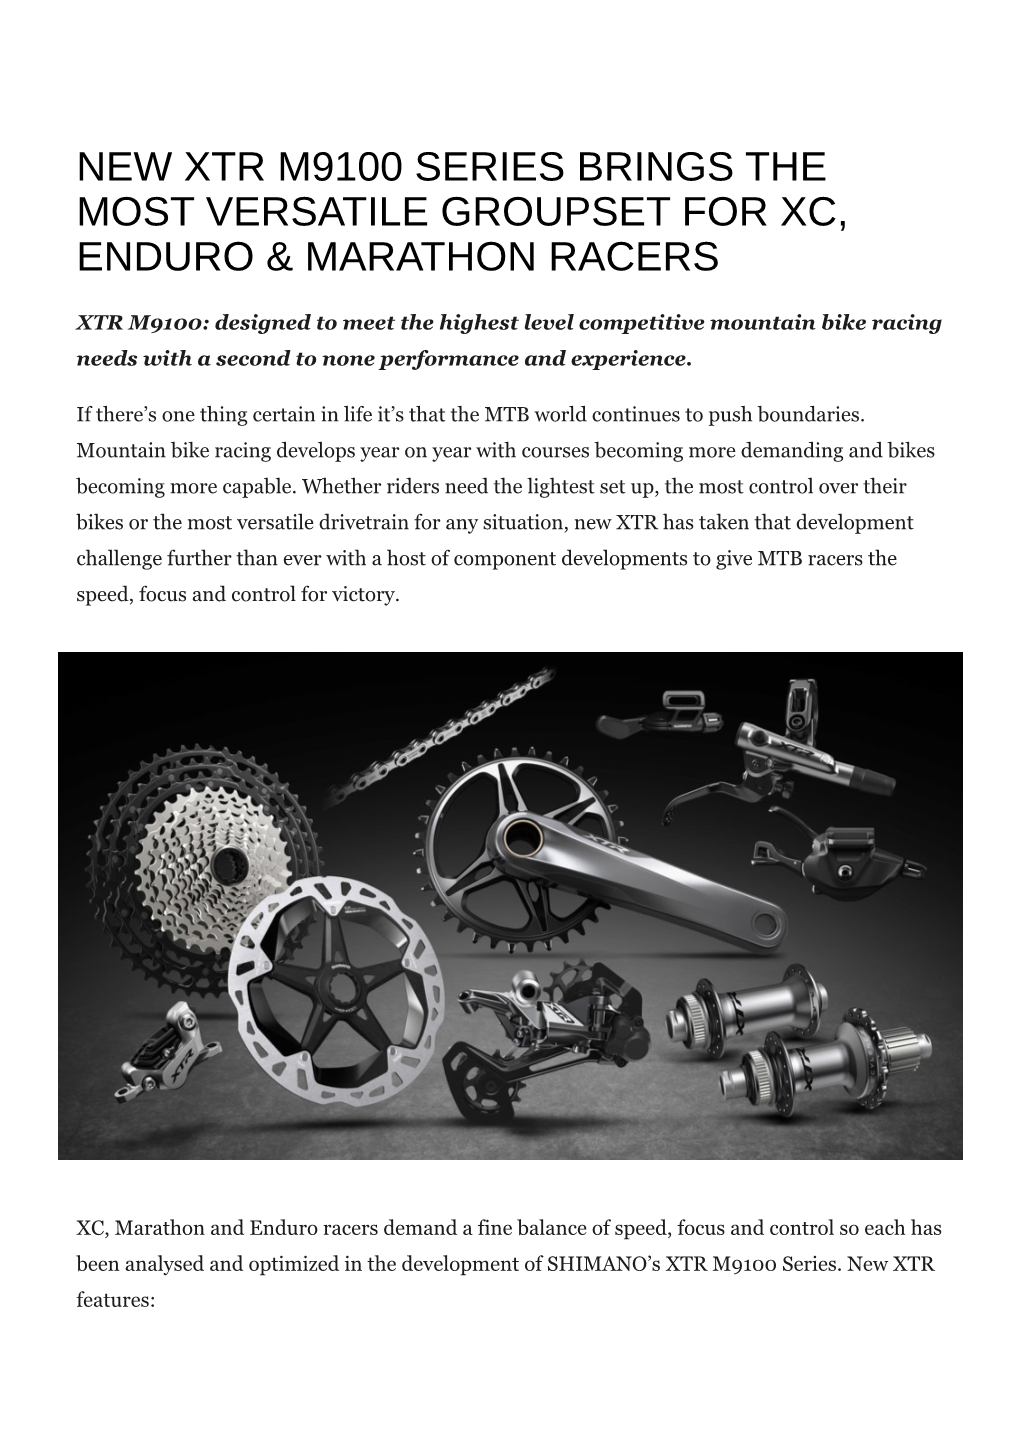 New Xtr M9100 Series Brings the Most Versatile Groupset for Xc, Enduro & Marathon Racers